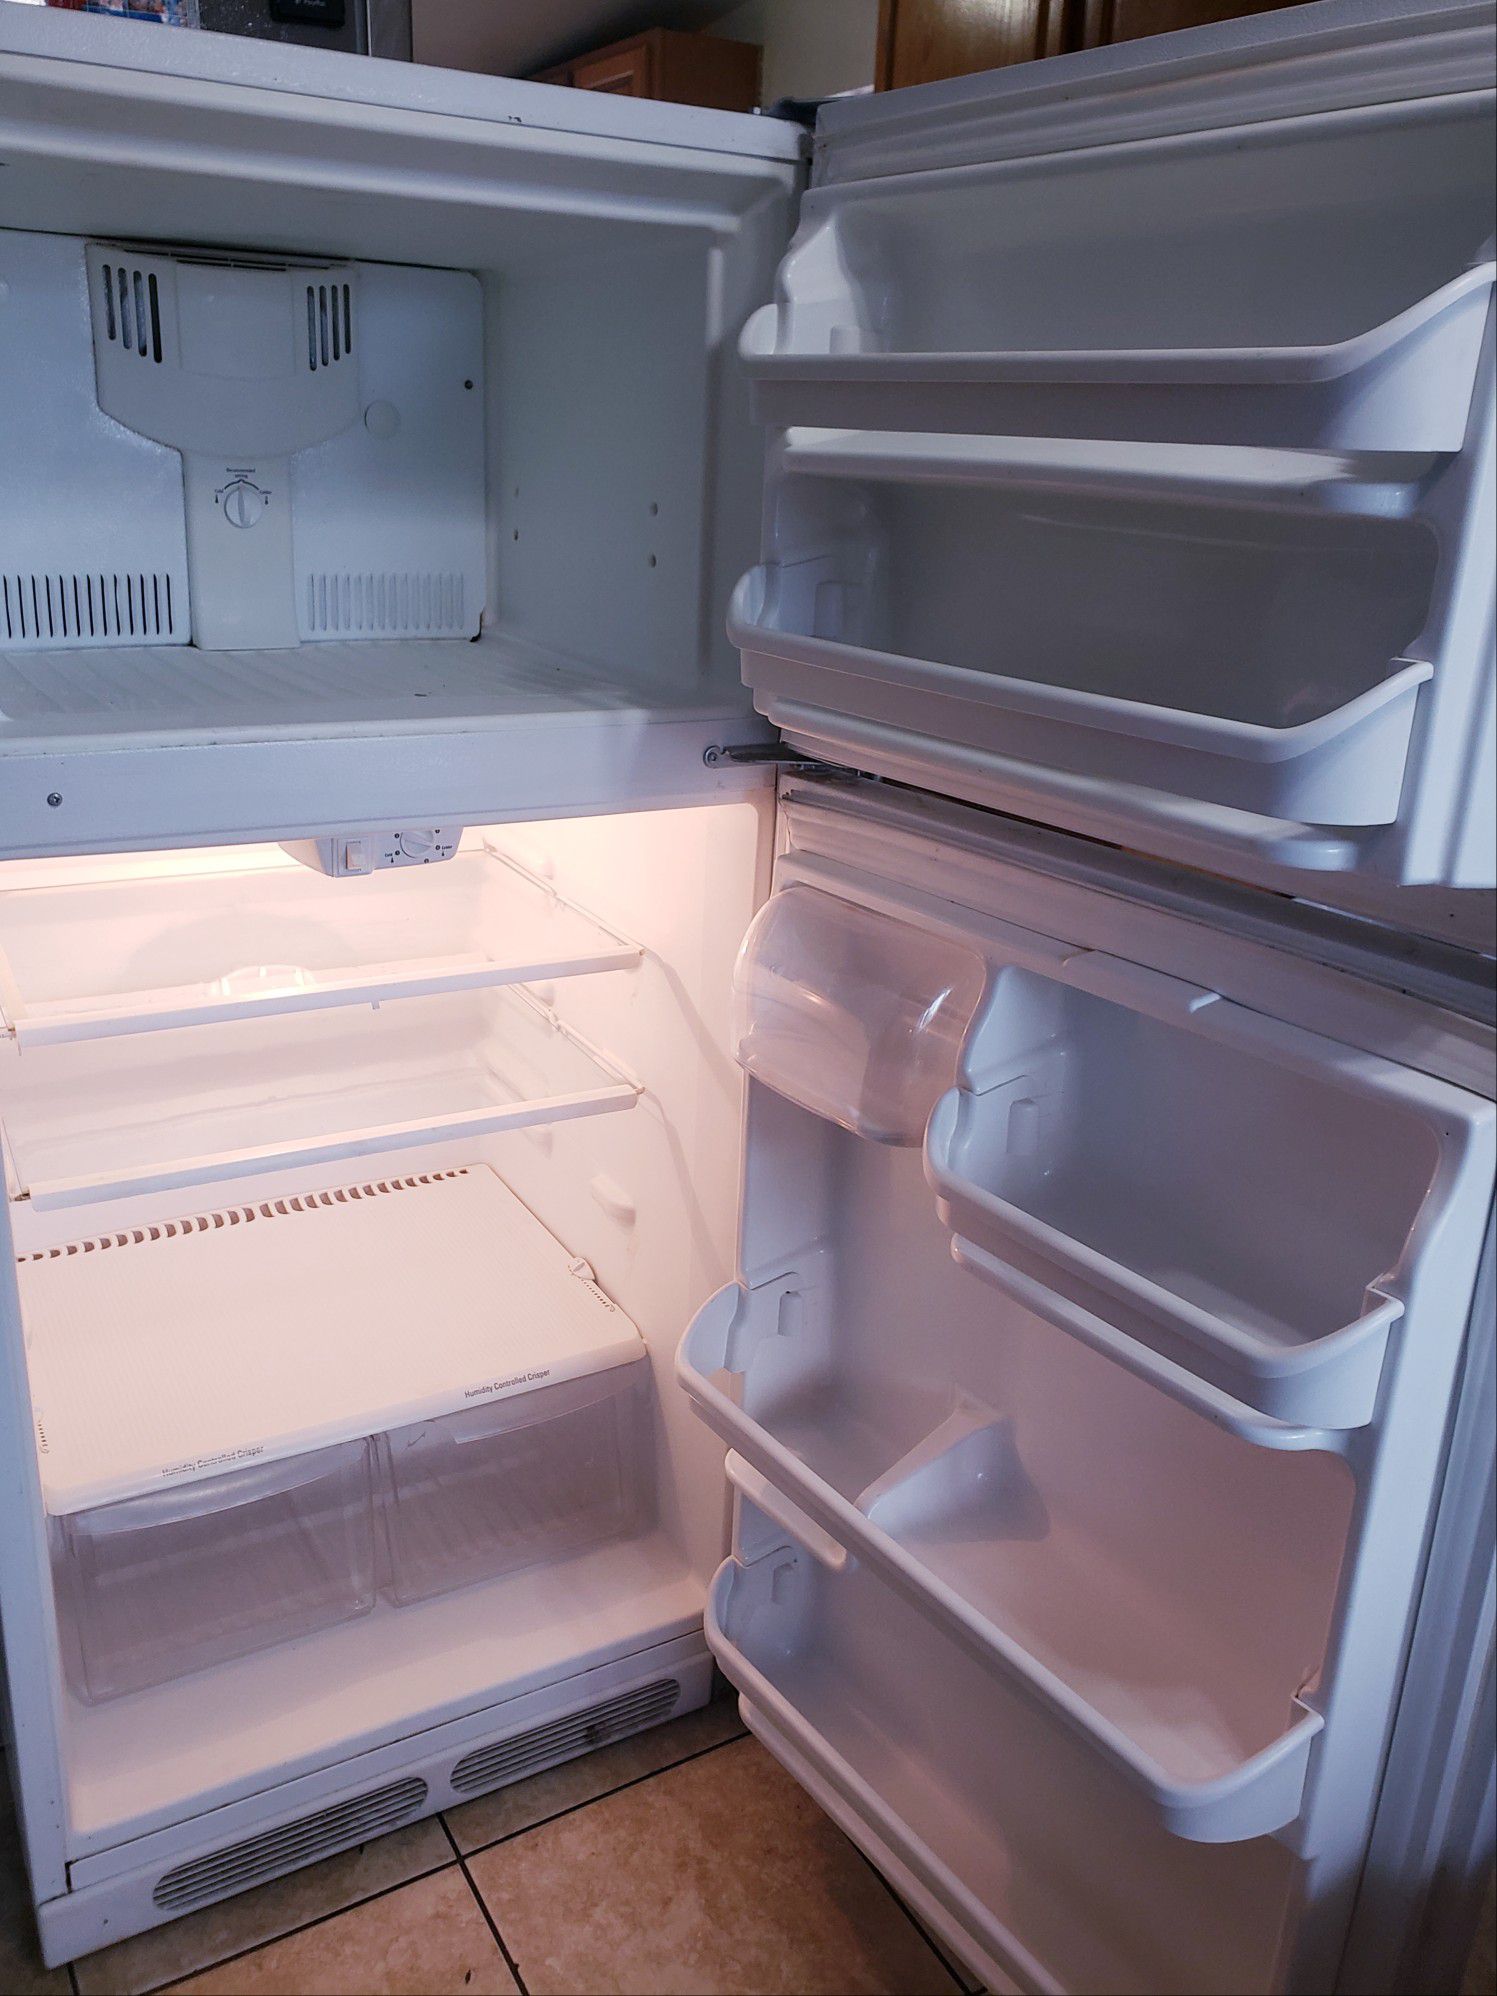 Kenmore refrigerator